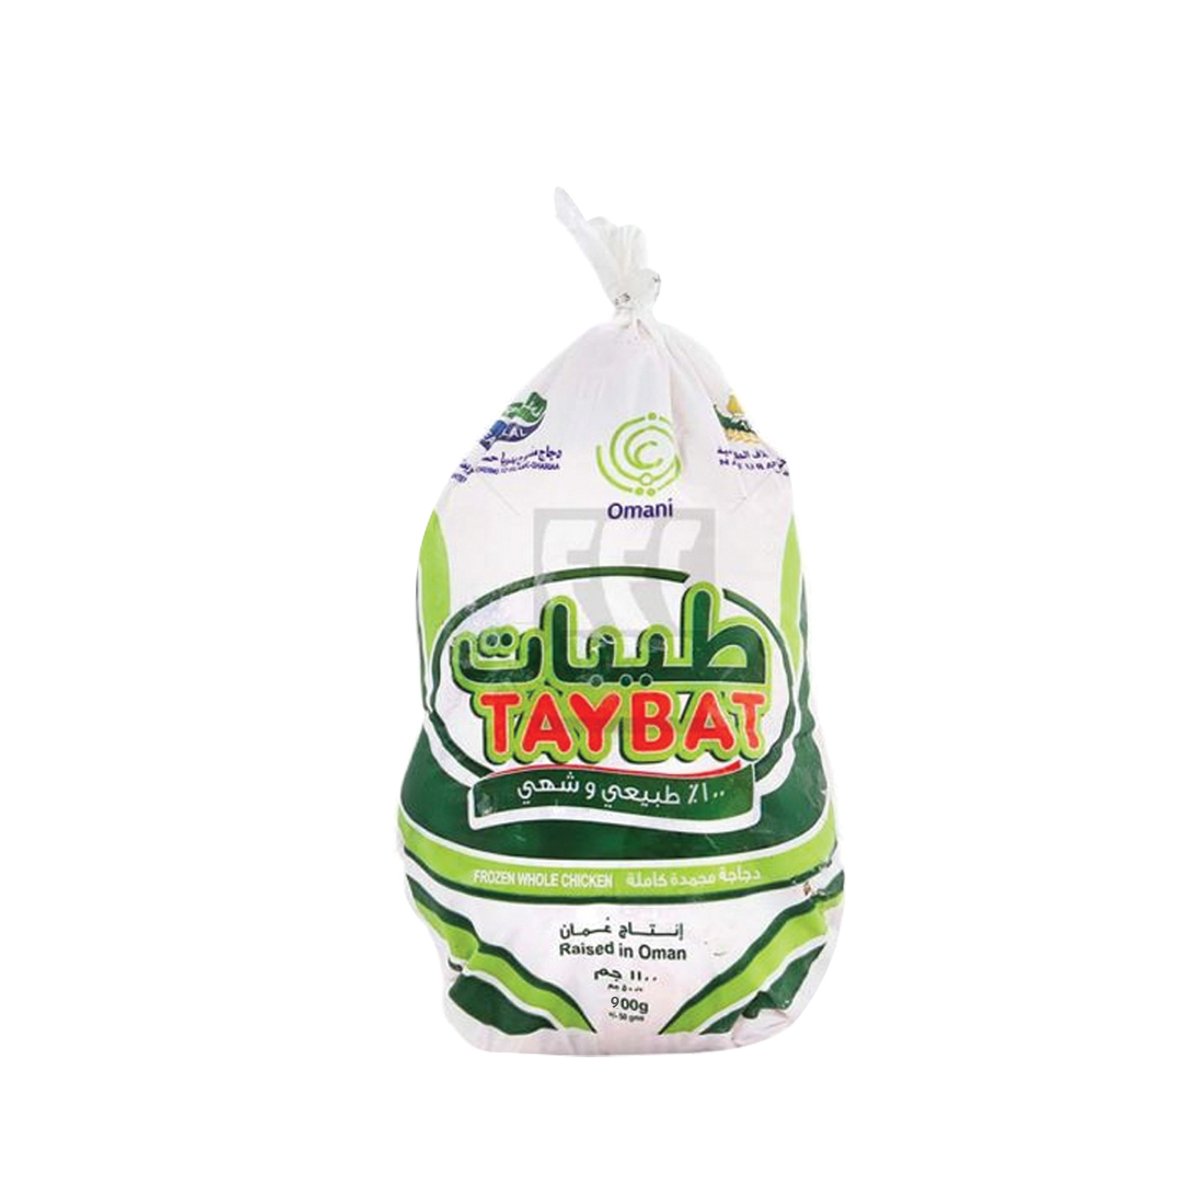 Taybat Whole Chicken 10 x 900g